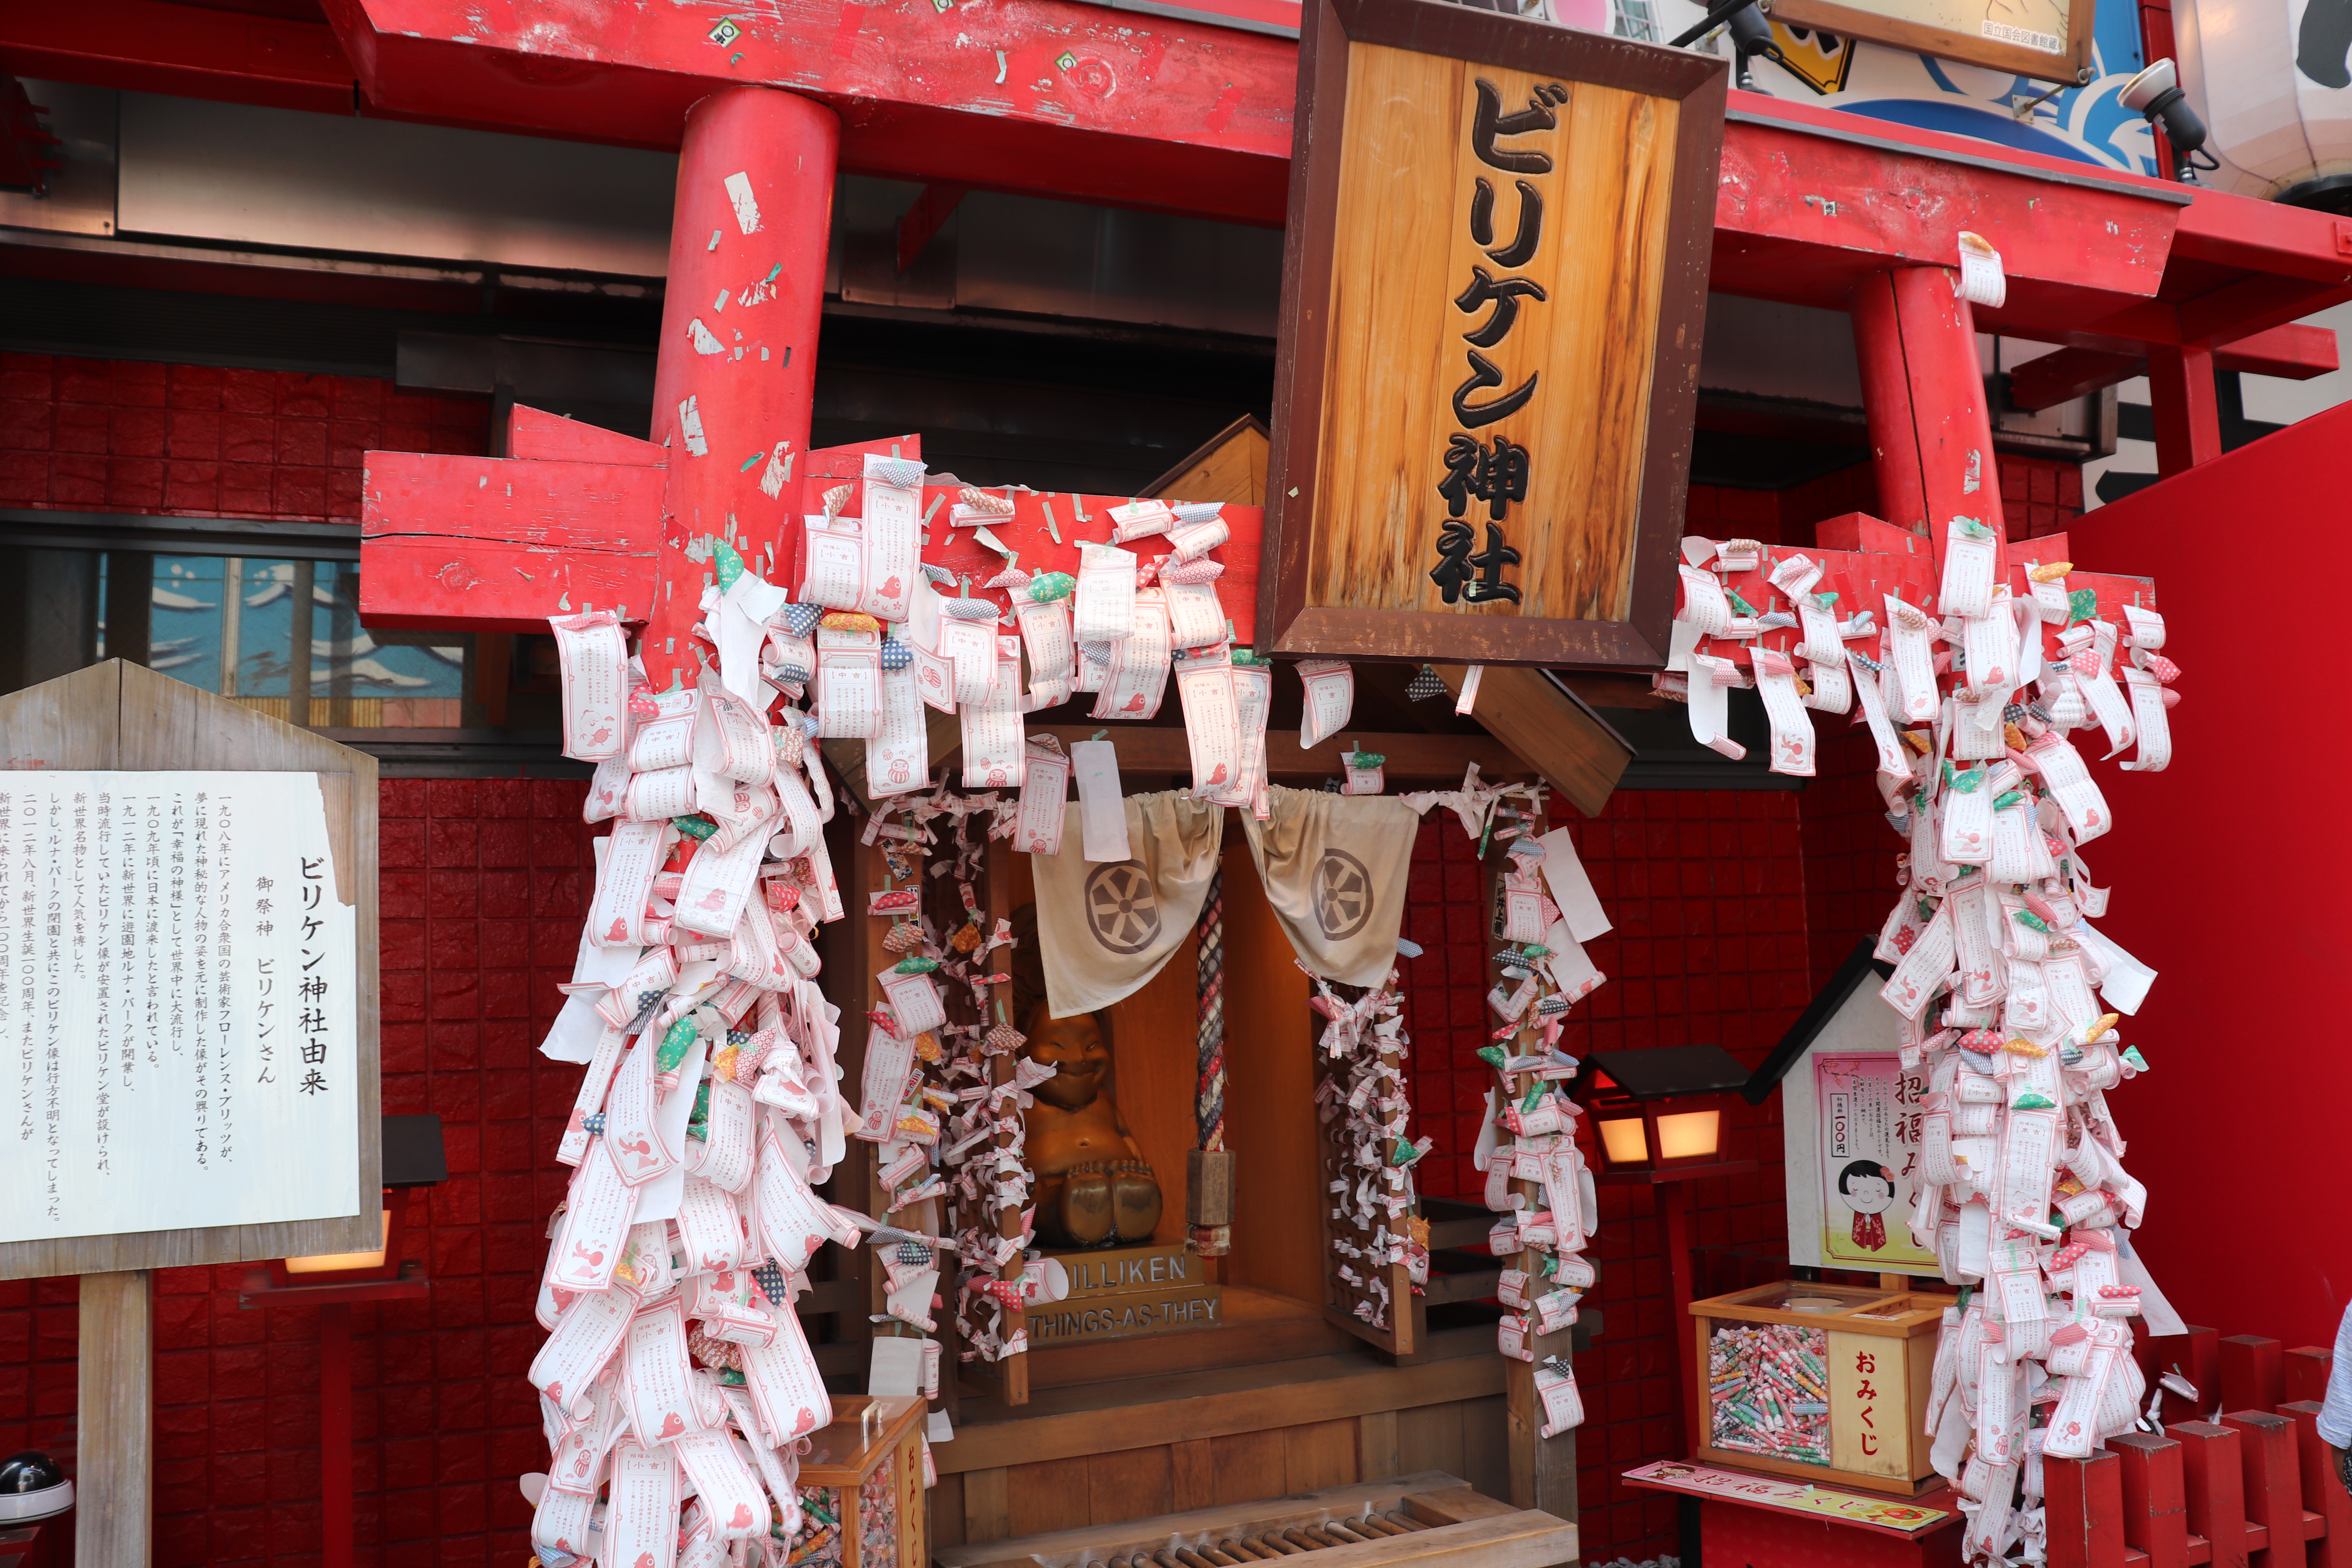 Billiken Shrine in shinsekai